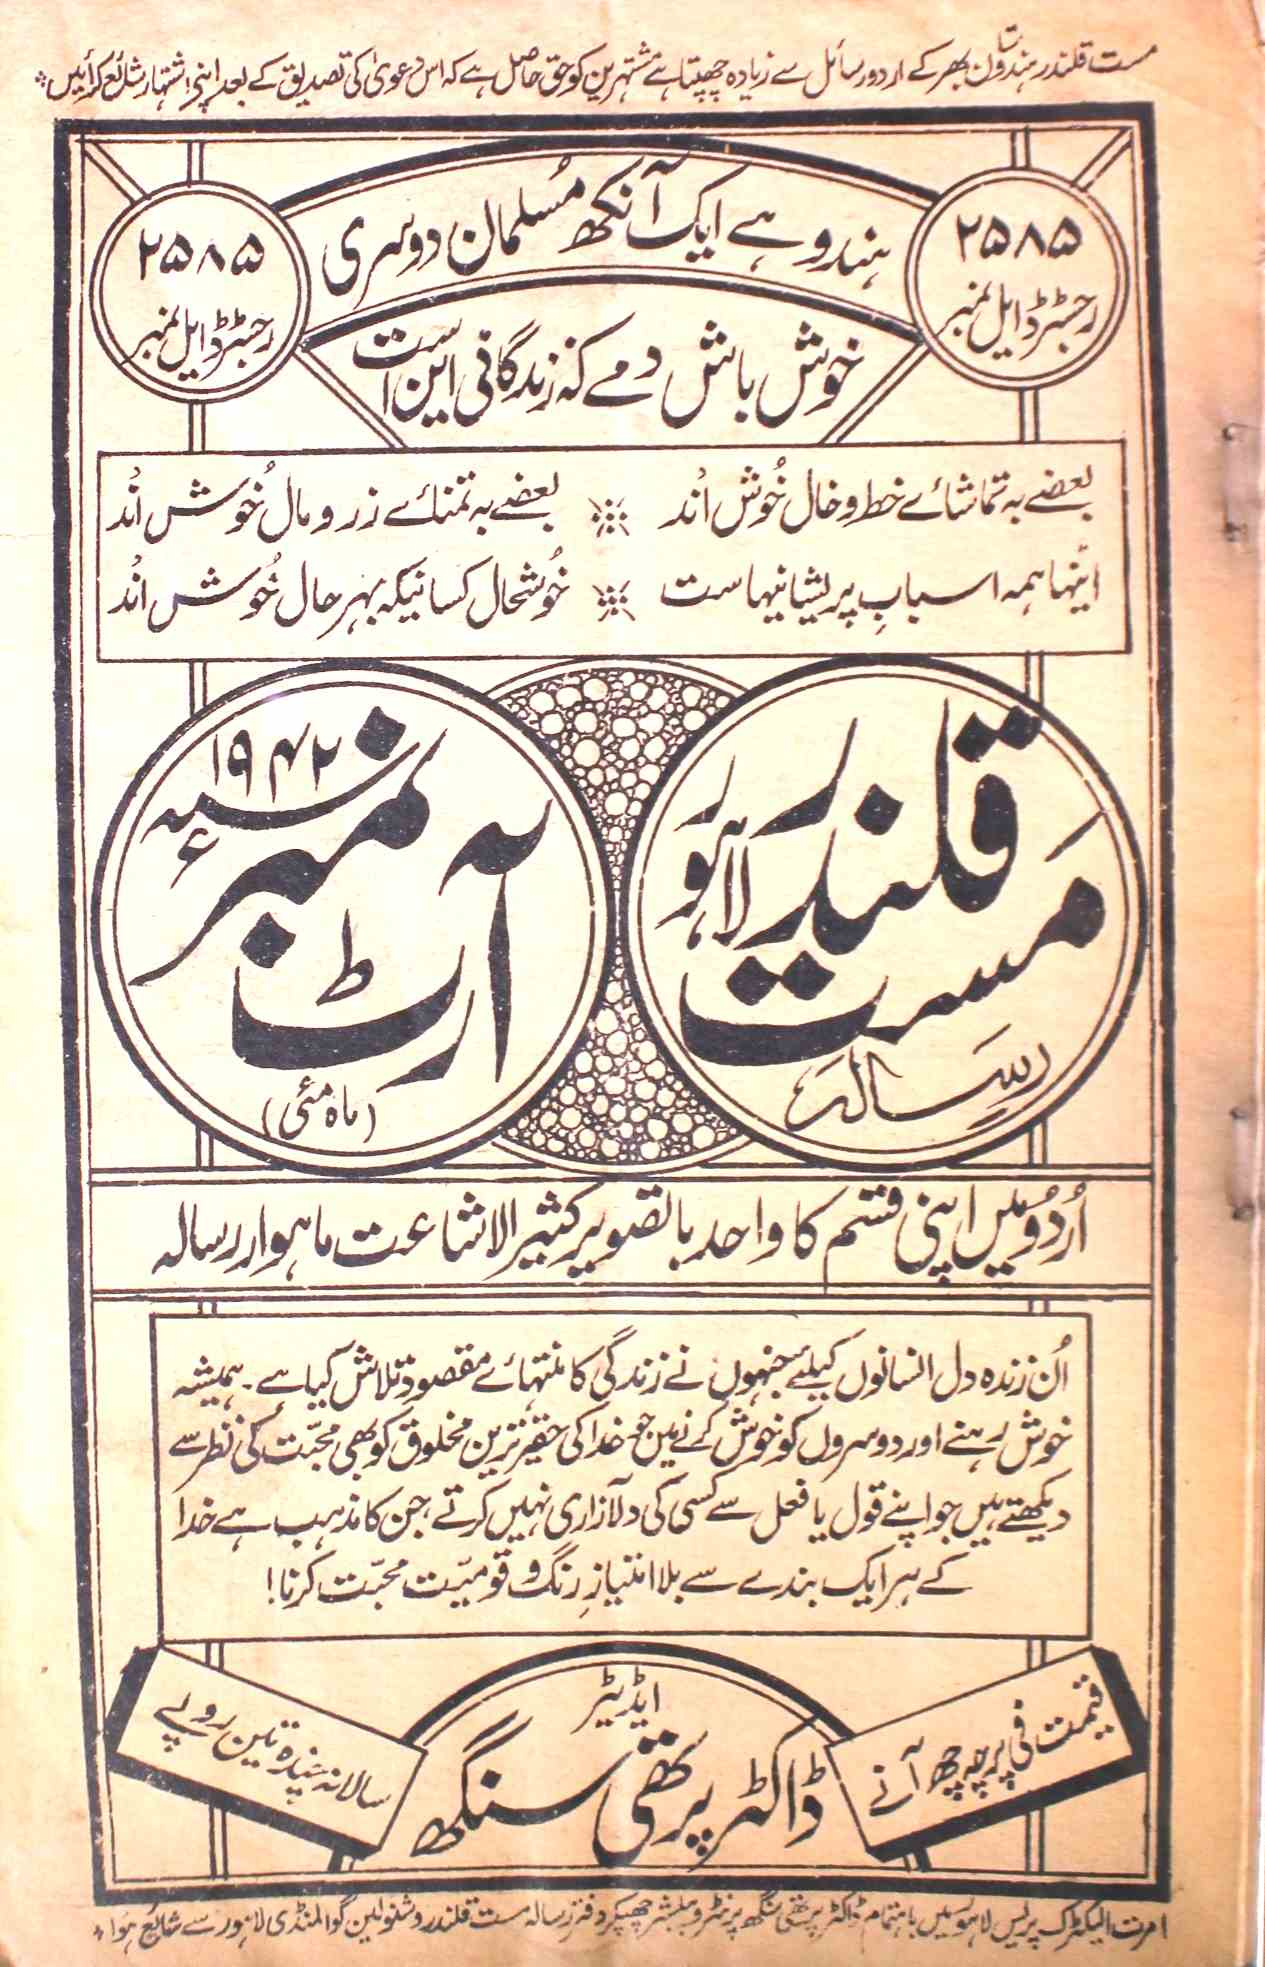 Mast Qalandar Jild 27 No 2 May(Art Num) 1942-SVK-Shumara Number-000